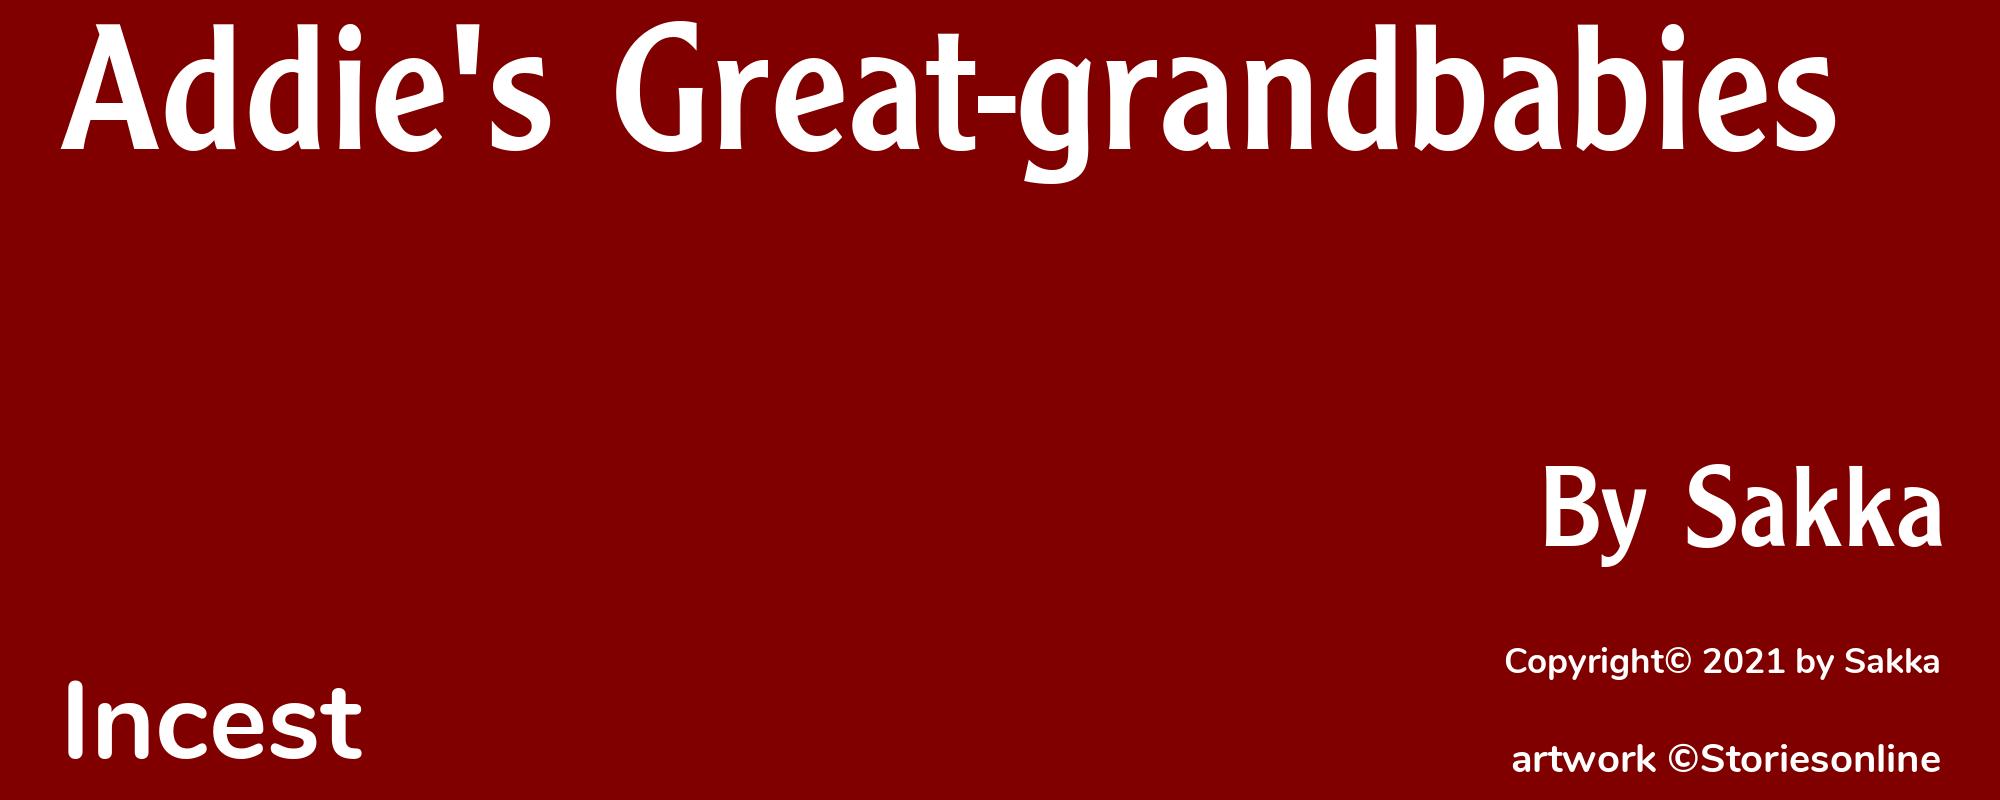 Addie's Great-grandbabies - Cover